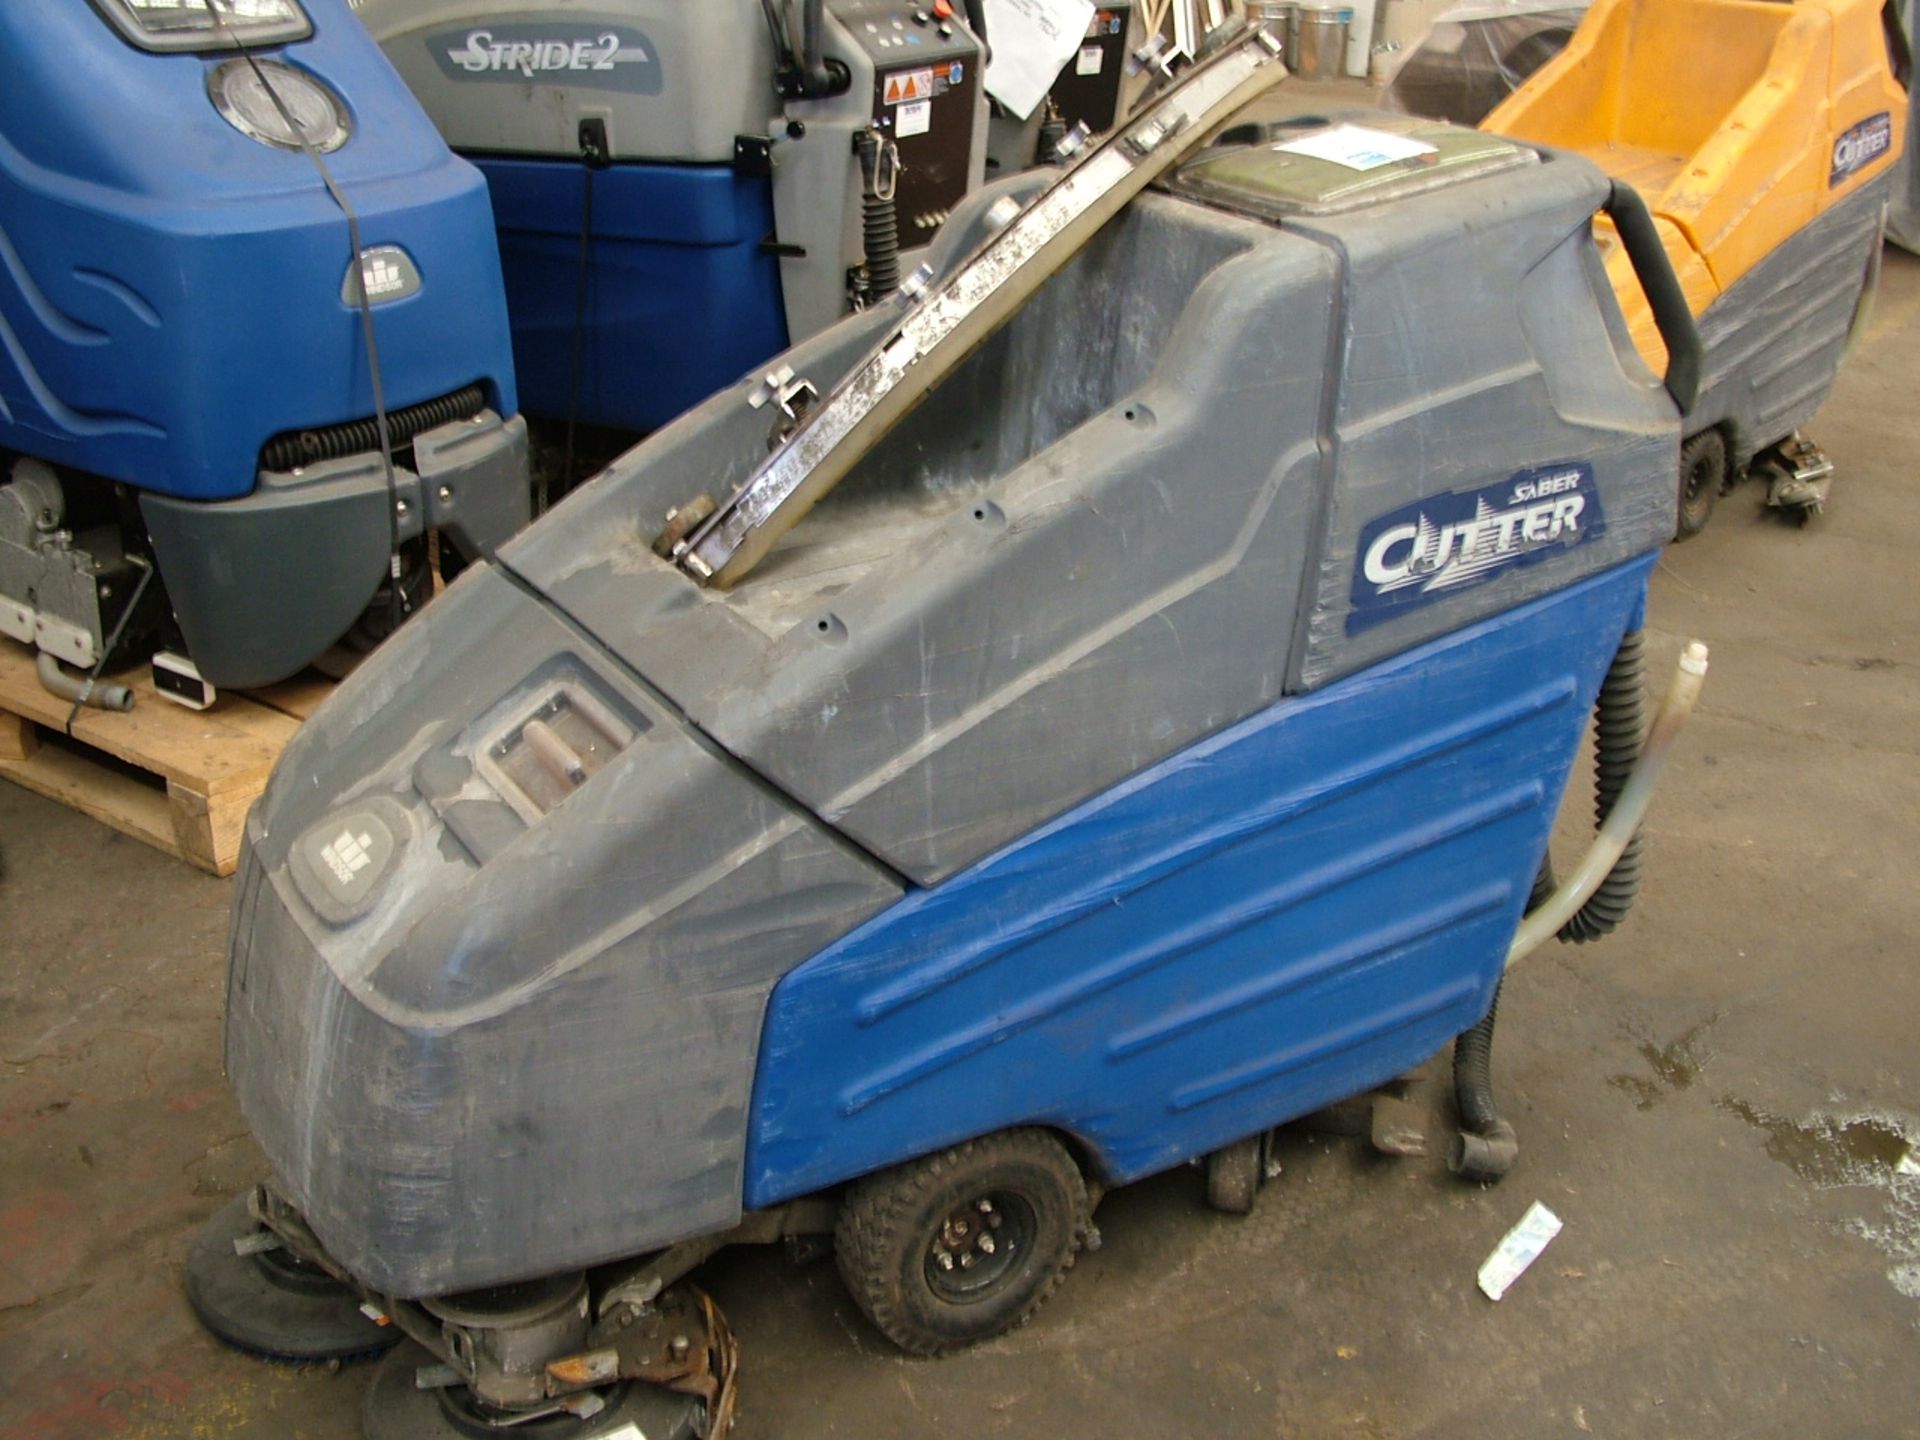 WINDSOR INDUSTRIES 'Saber Cutter SCE264' battery powered walk behind industrial floor scrubber,